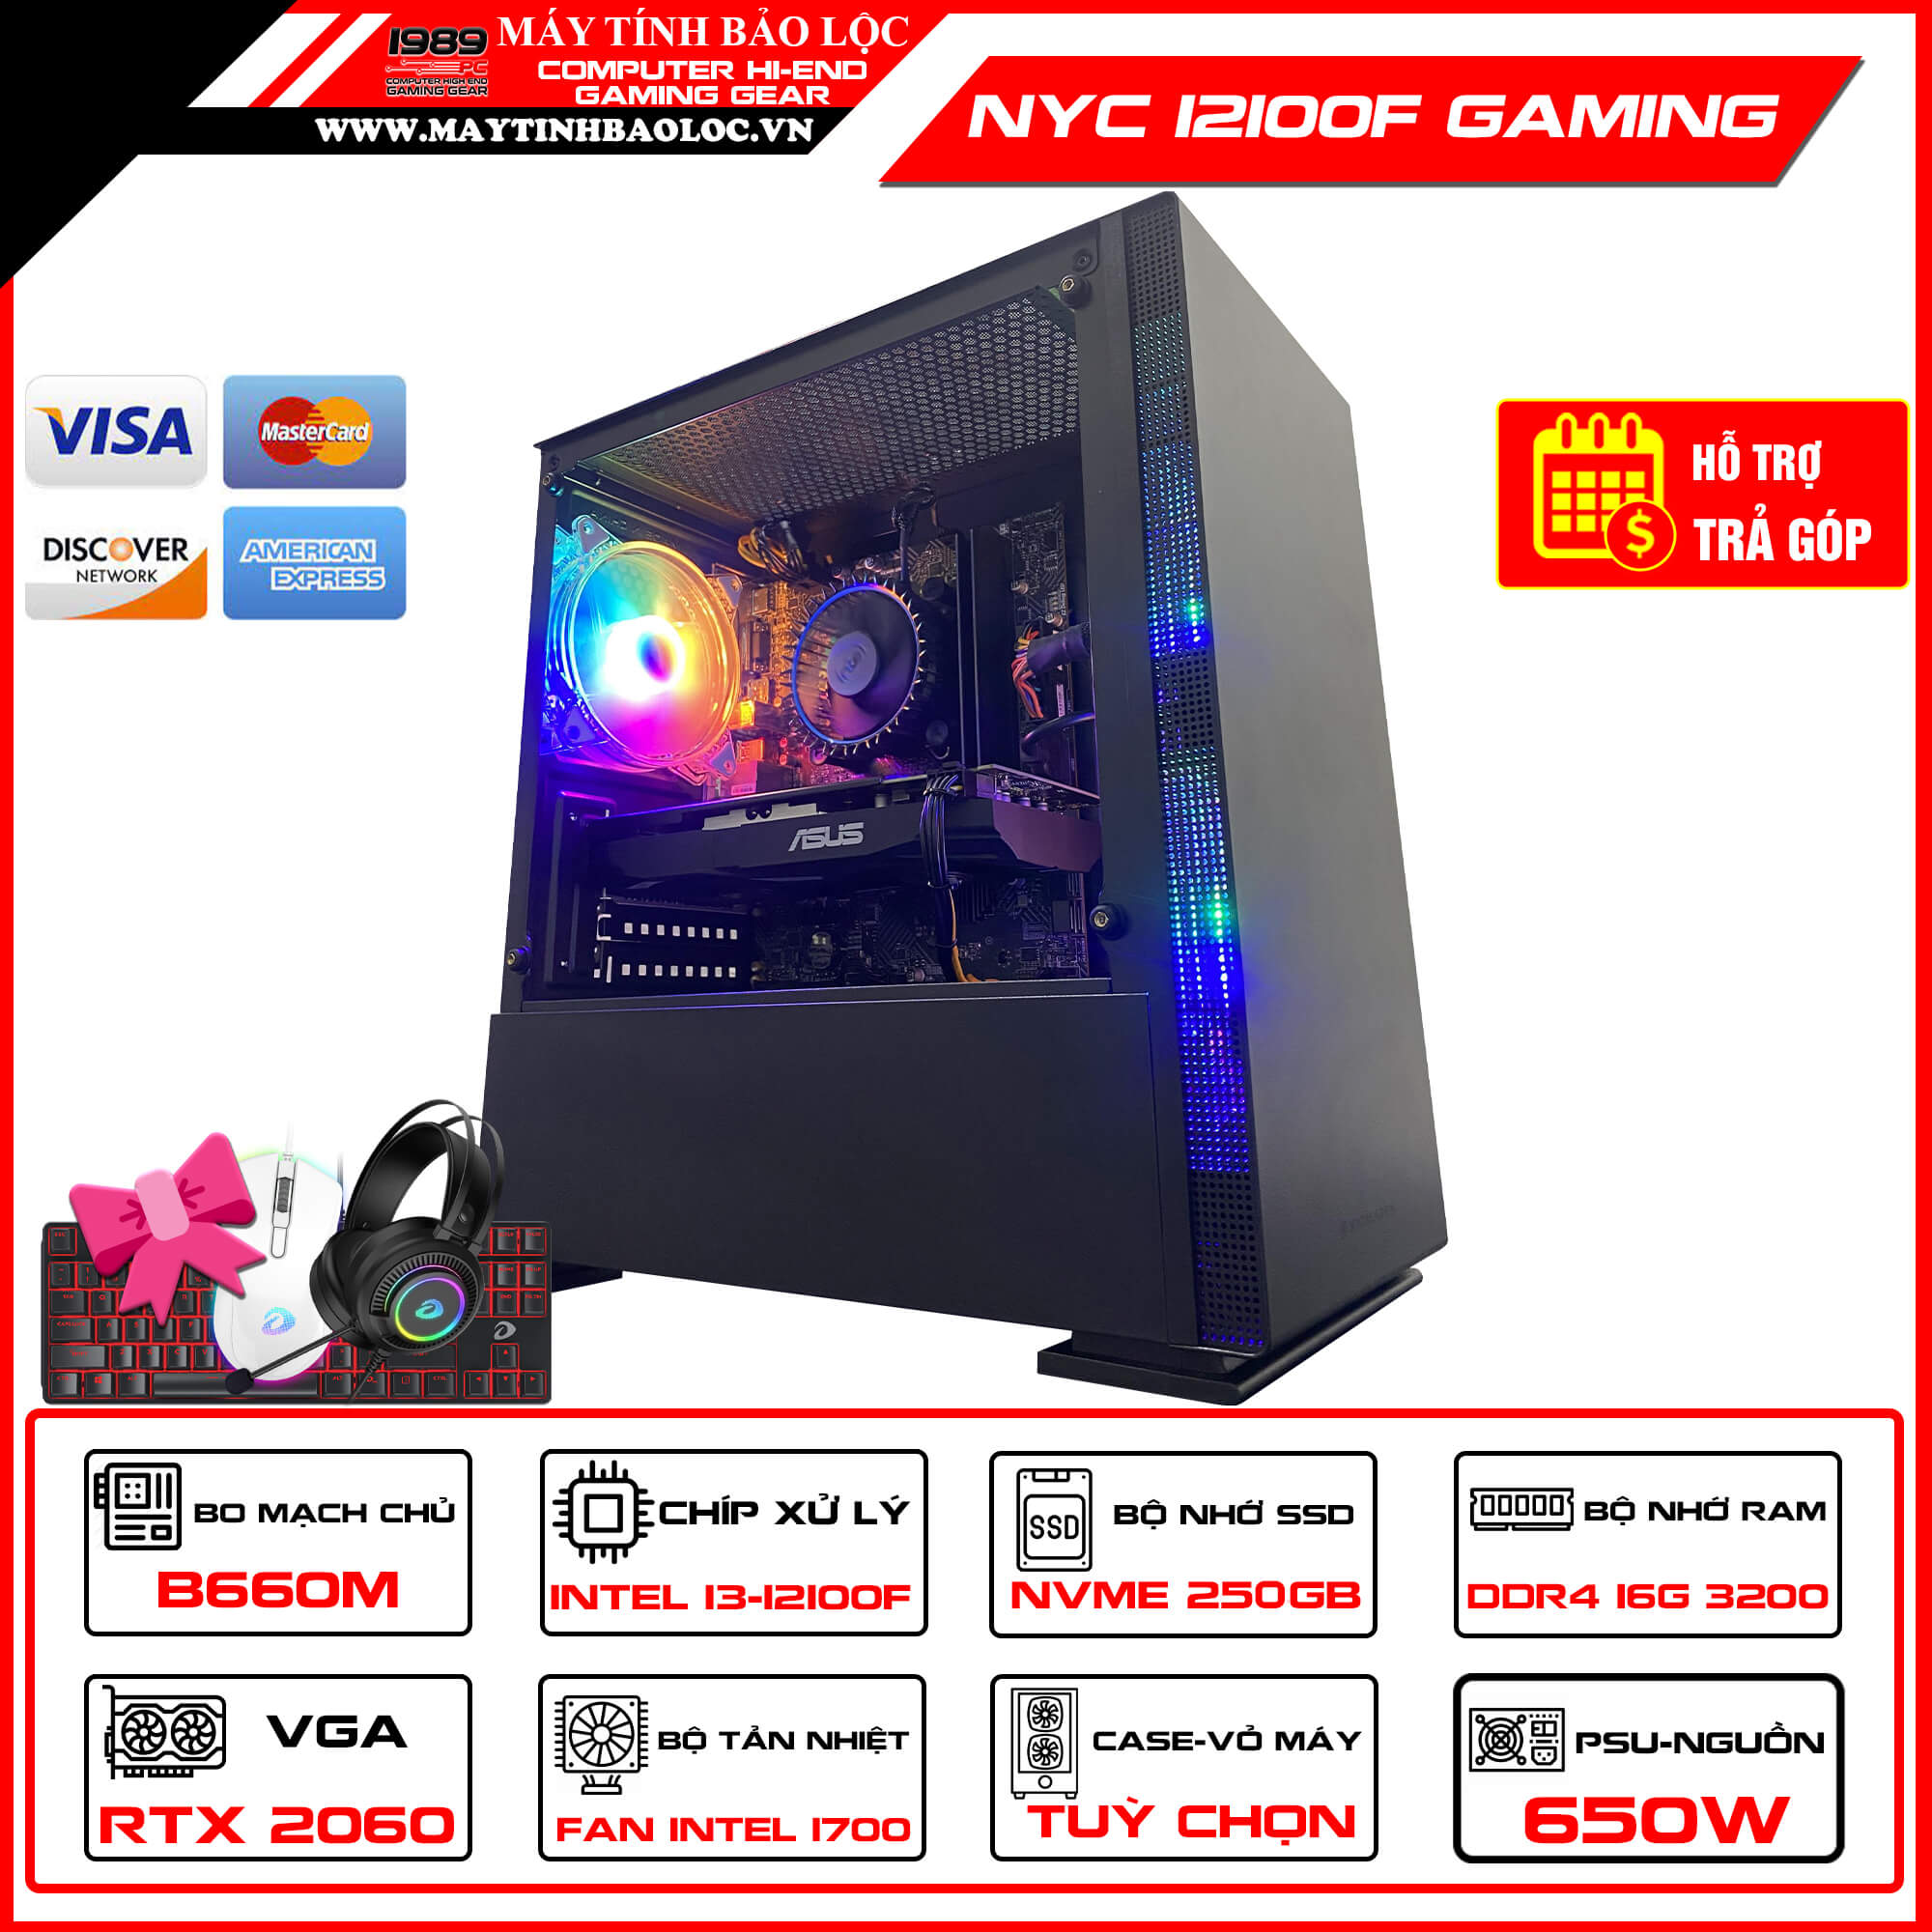 bộ PC NYC 12100F GAMING